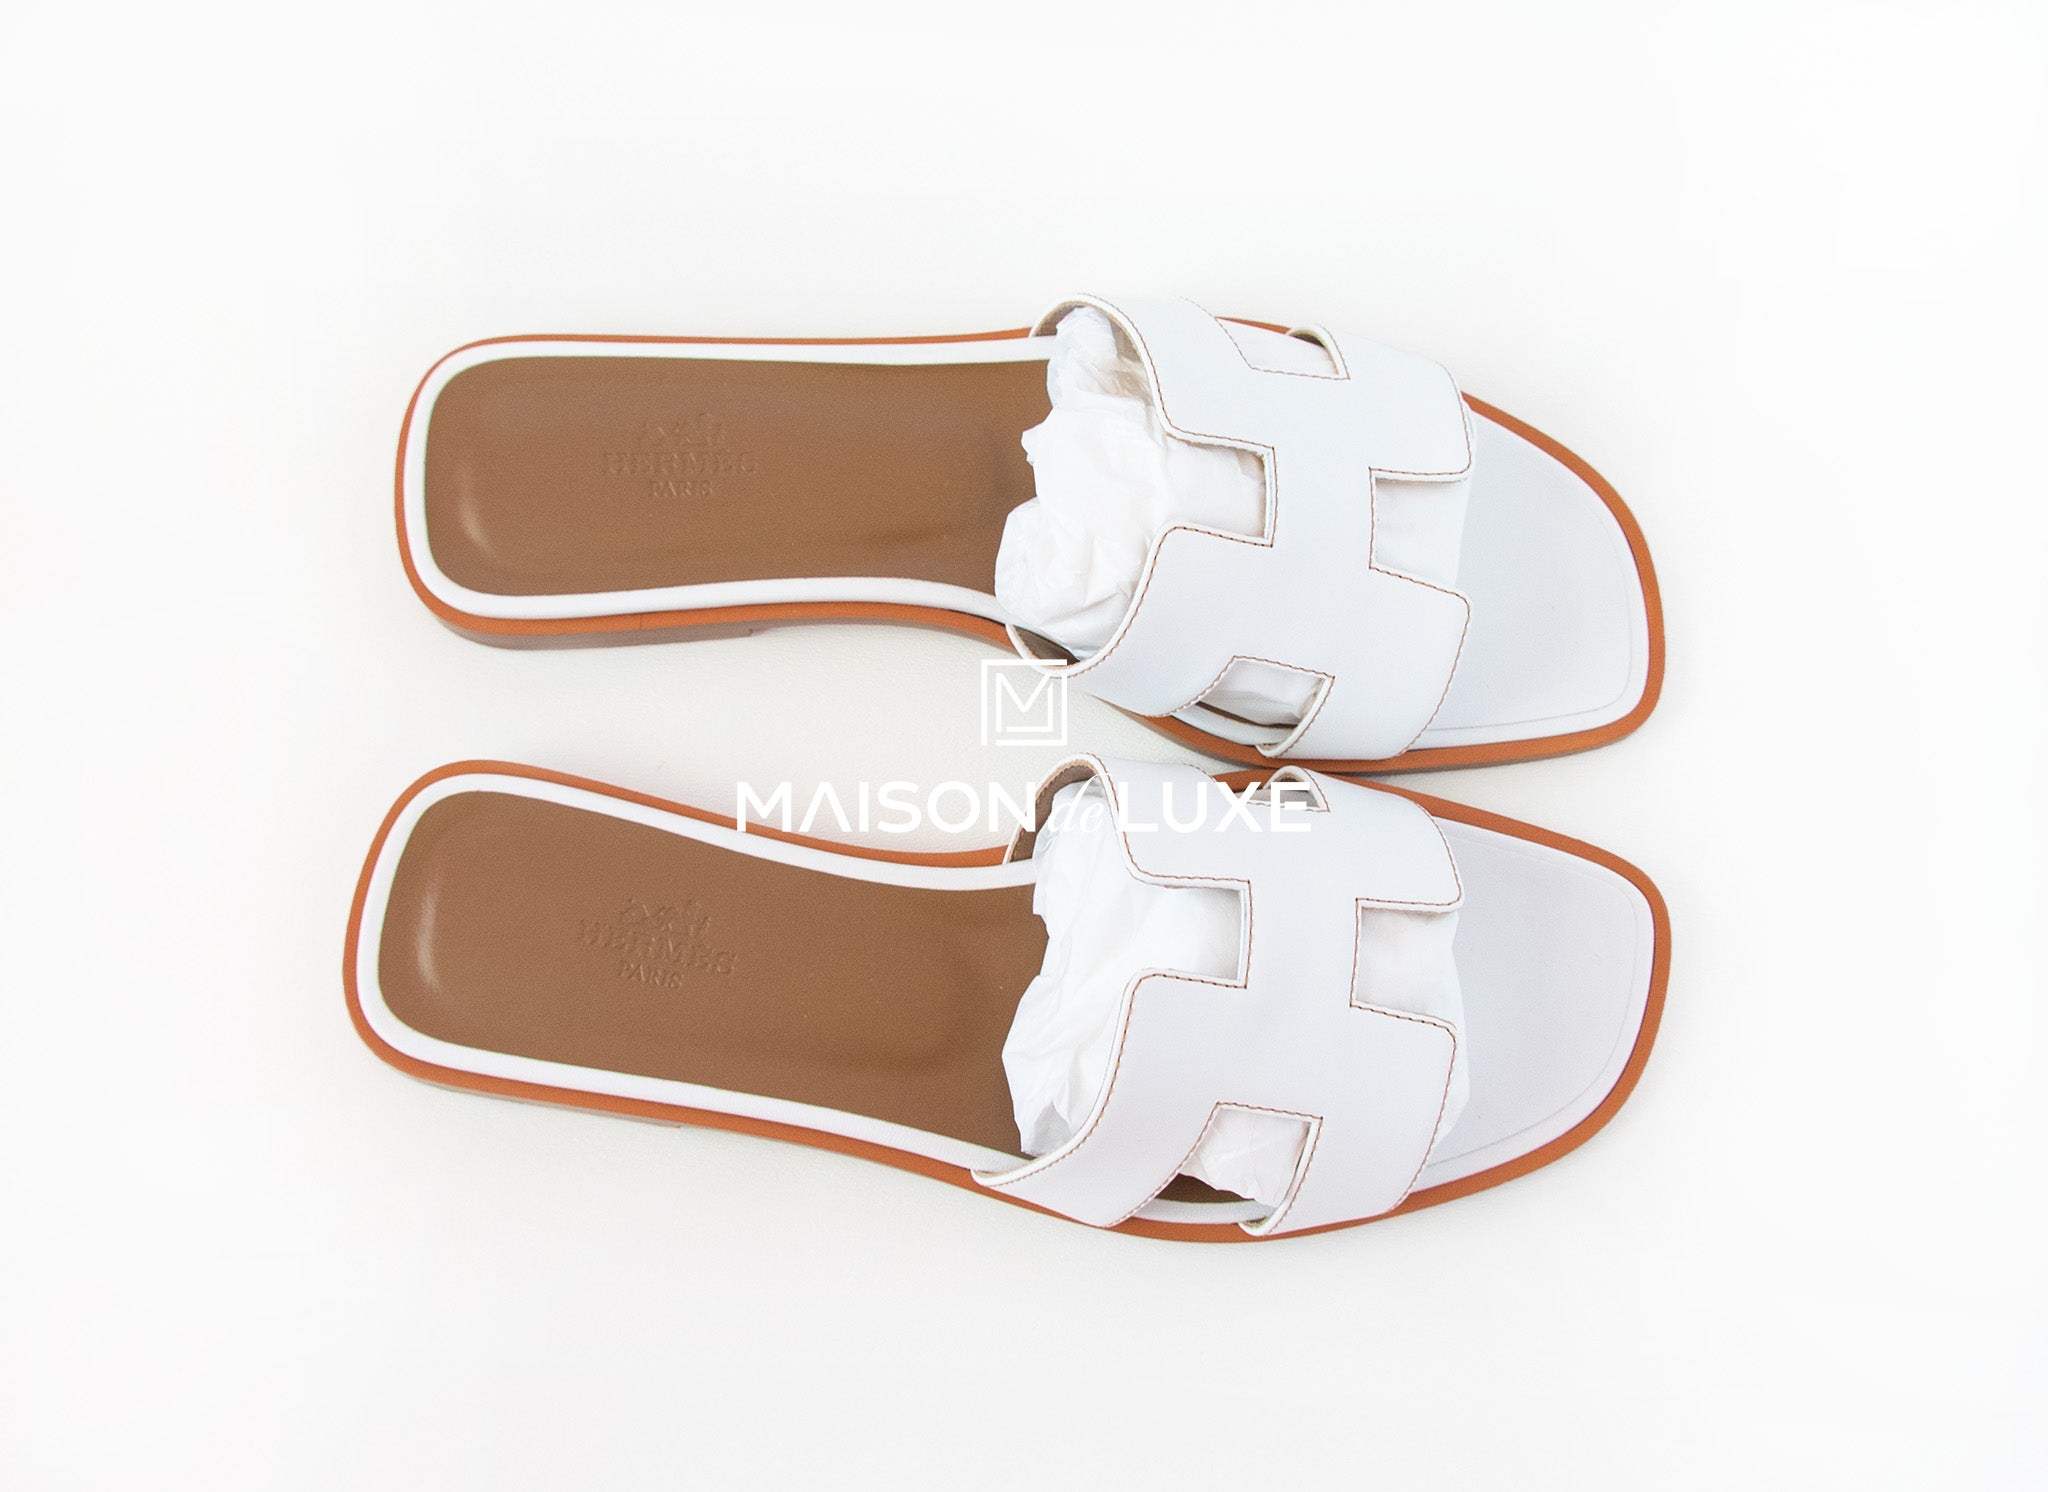 Oran sandal  Hermès UAE